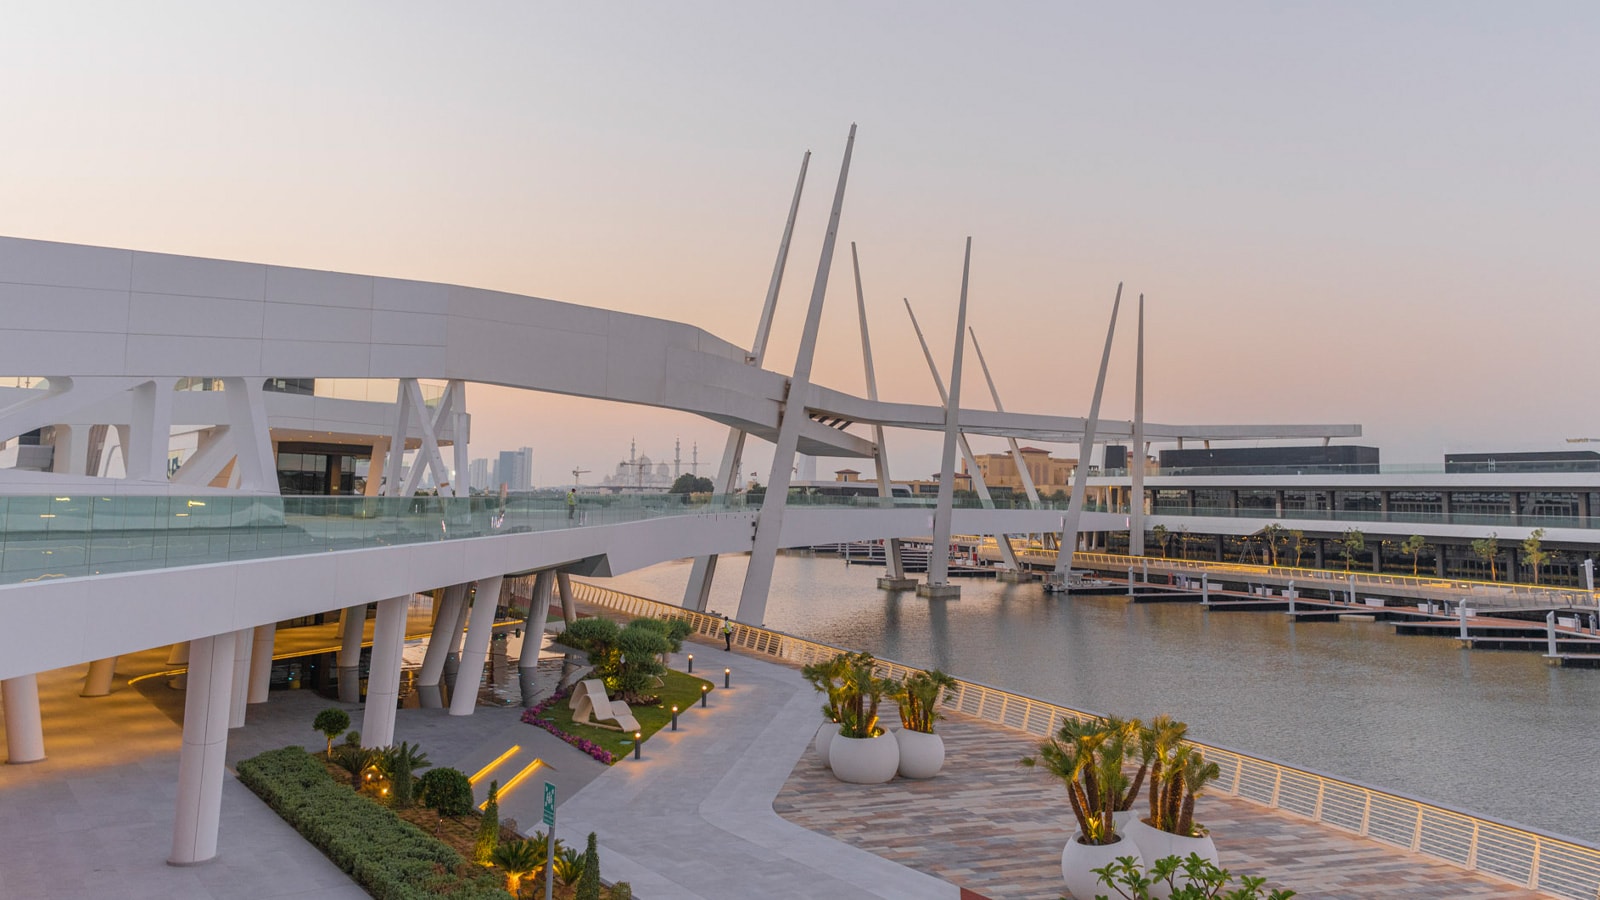 Al Qana, the perfect portrait of architectural simplicity in Abu Dhabi